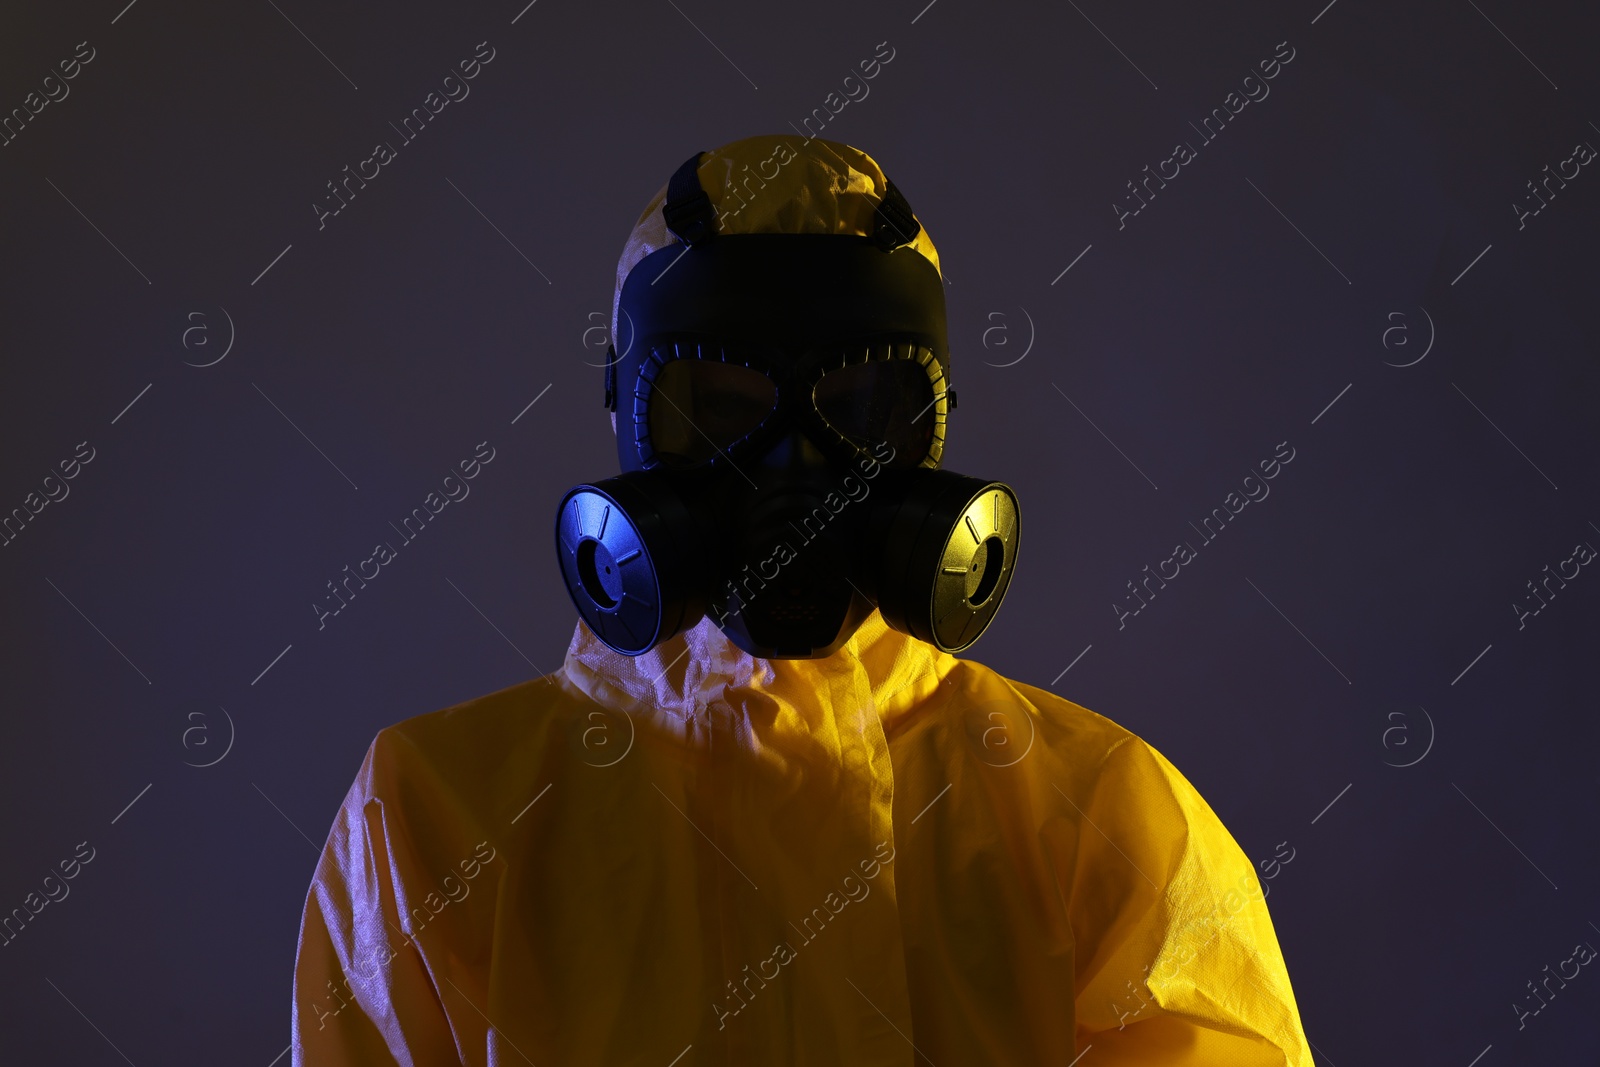 Photo of Worker in gas mask on dark background